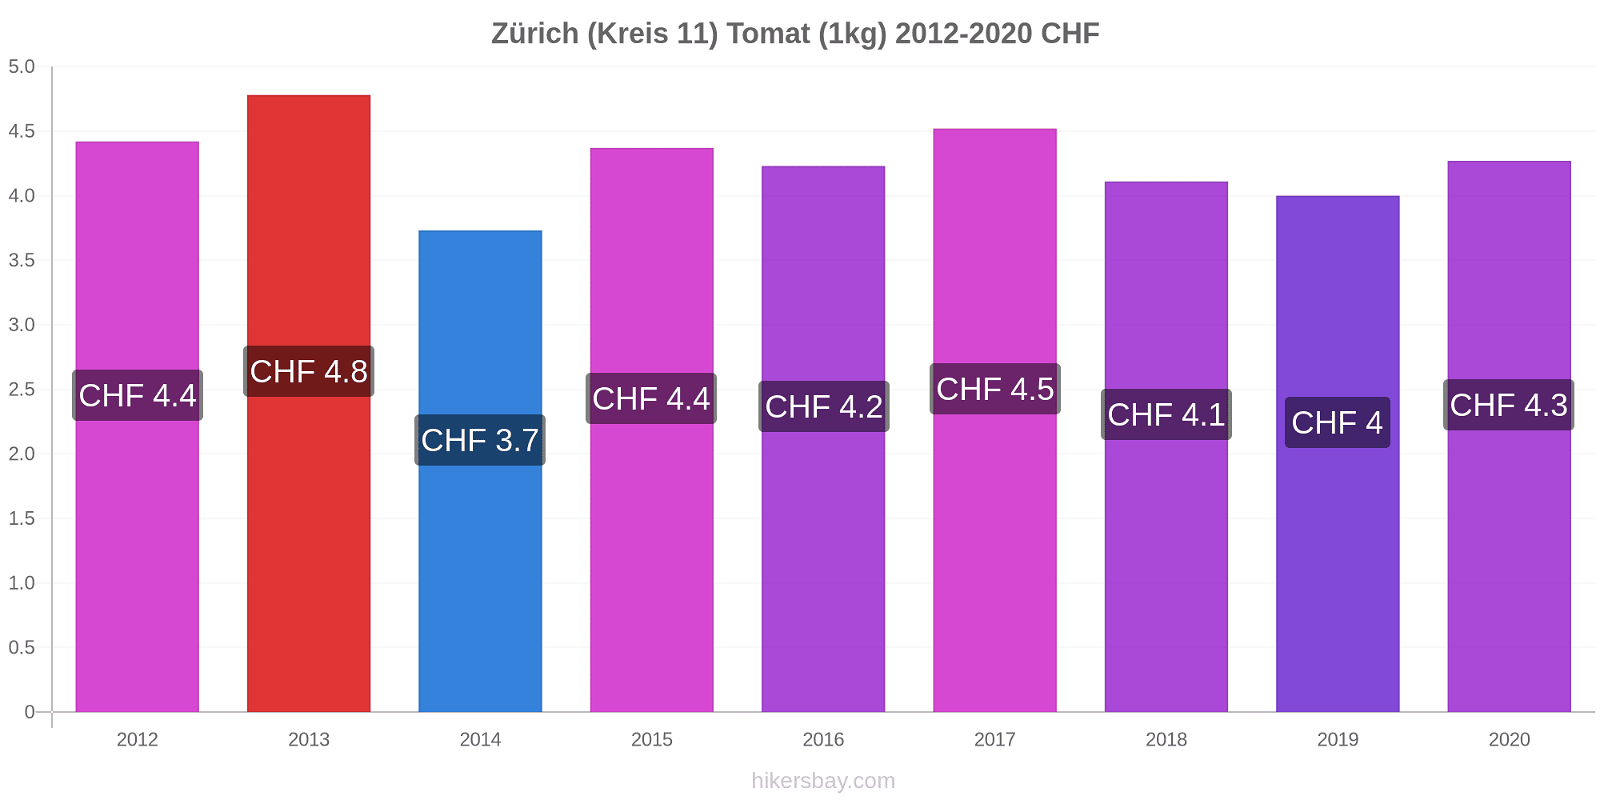 Zürich (Kreis 11) perubahan harga Tomat (1kg) hikersbay.com